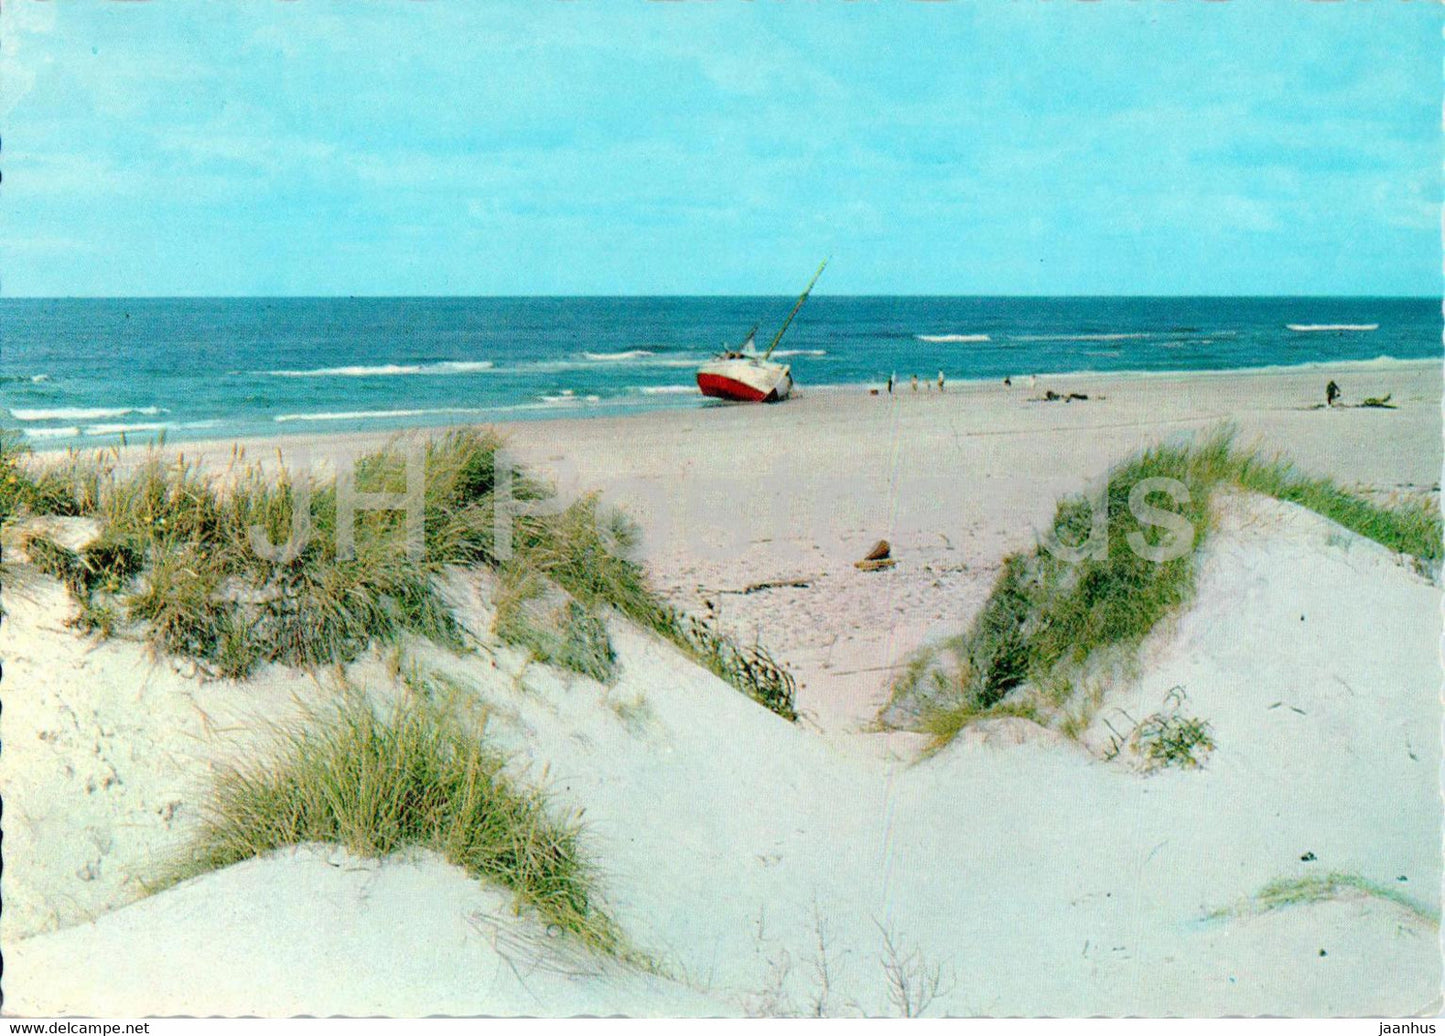 Vesterhavet - North Sea - 49 - Denmark - unused - JH Postcards